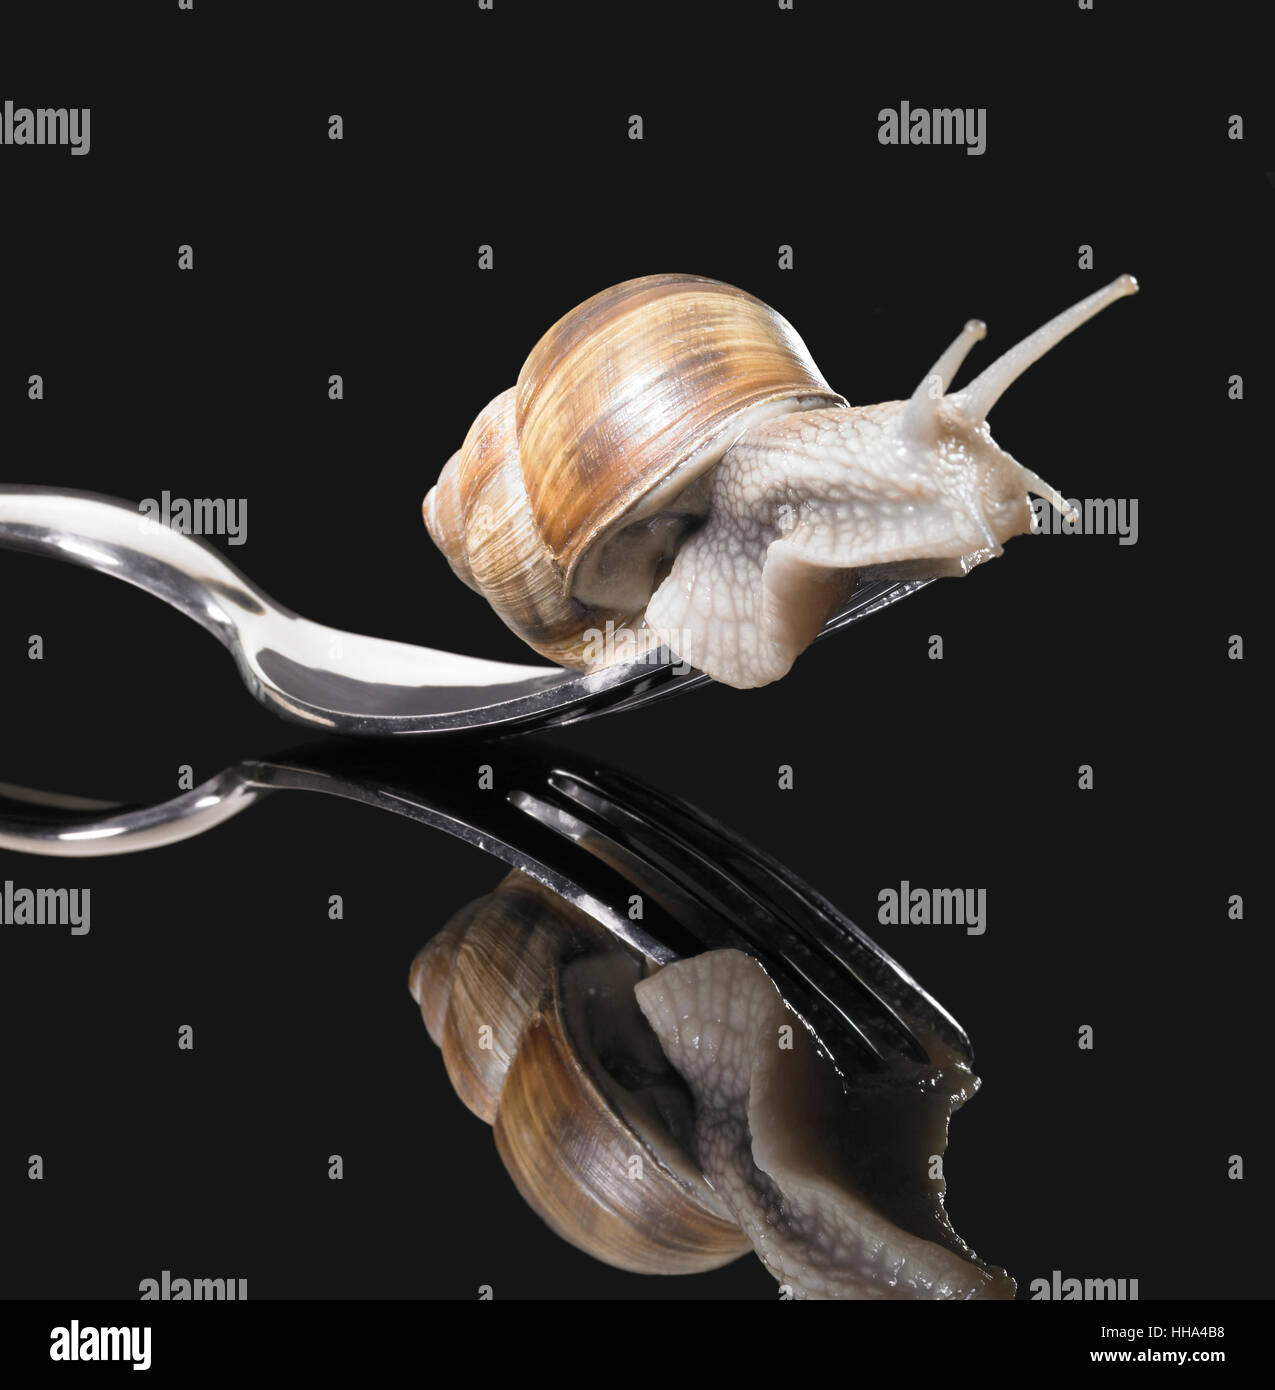 snail, edible snail, snail shell, fork, gastropod, motion, postponement, Stock Photo